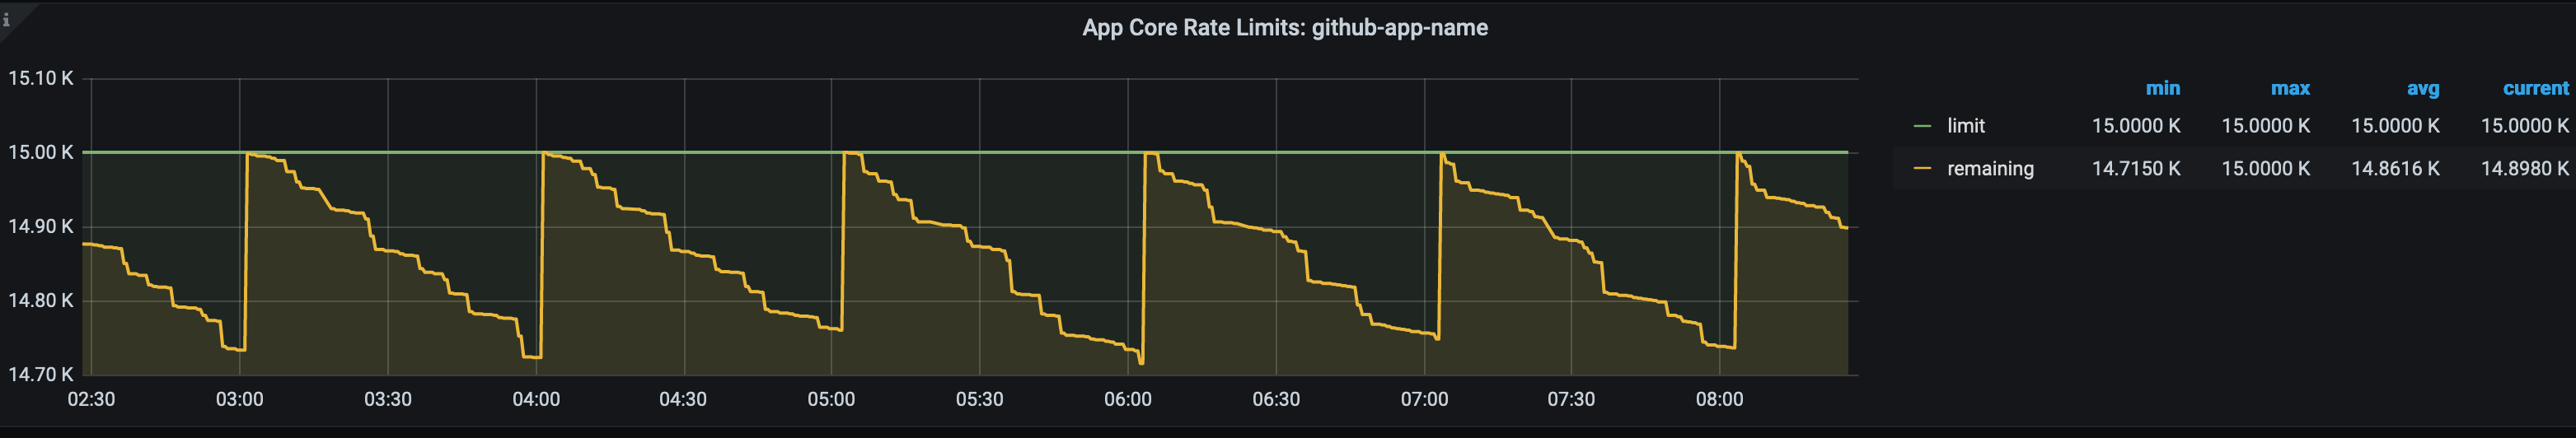 github-app-rate-limits